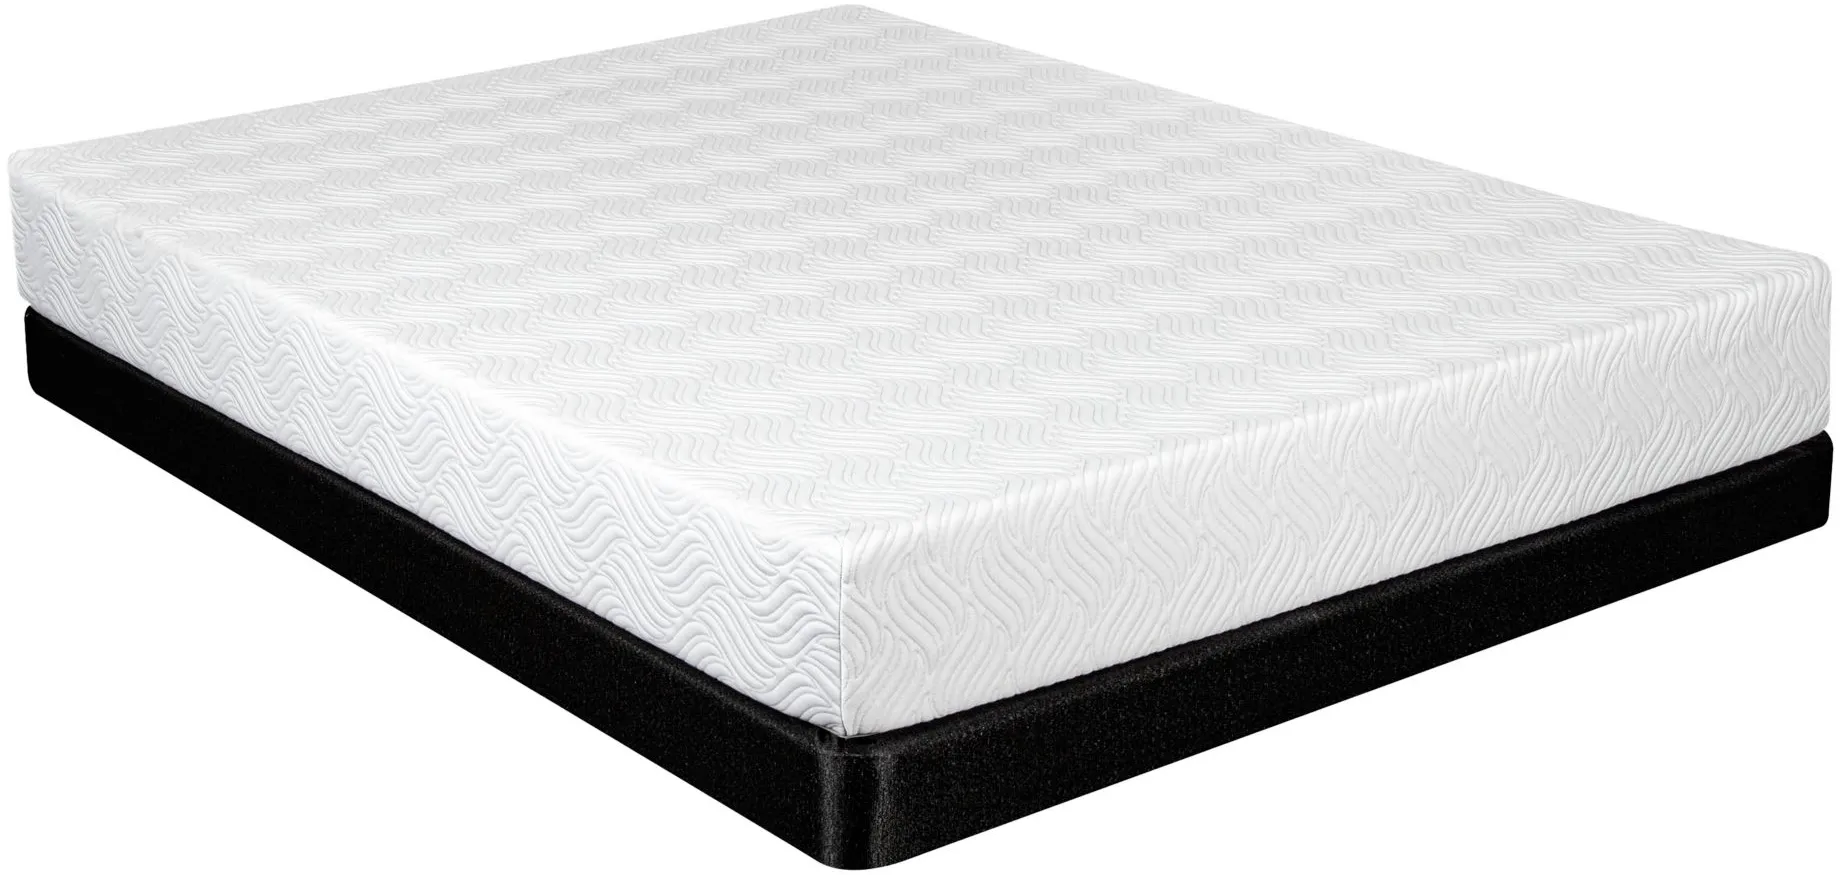 bellanest memory foam mattress